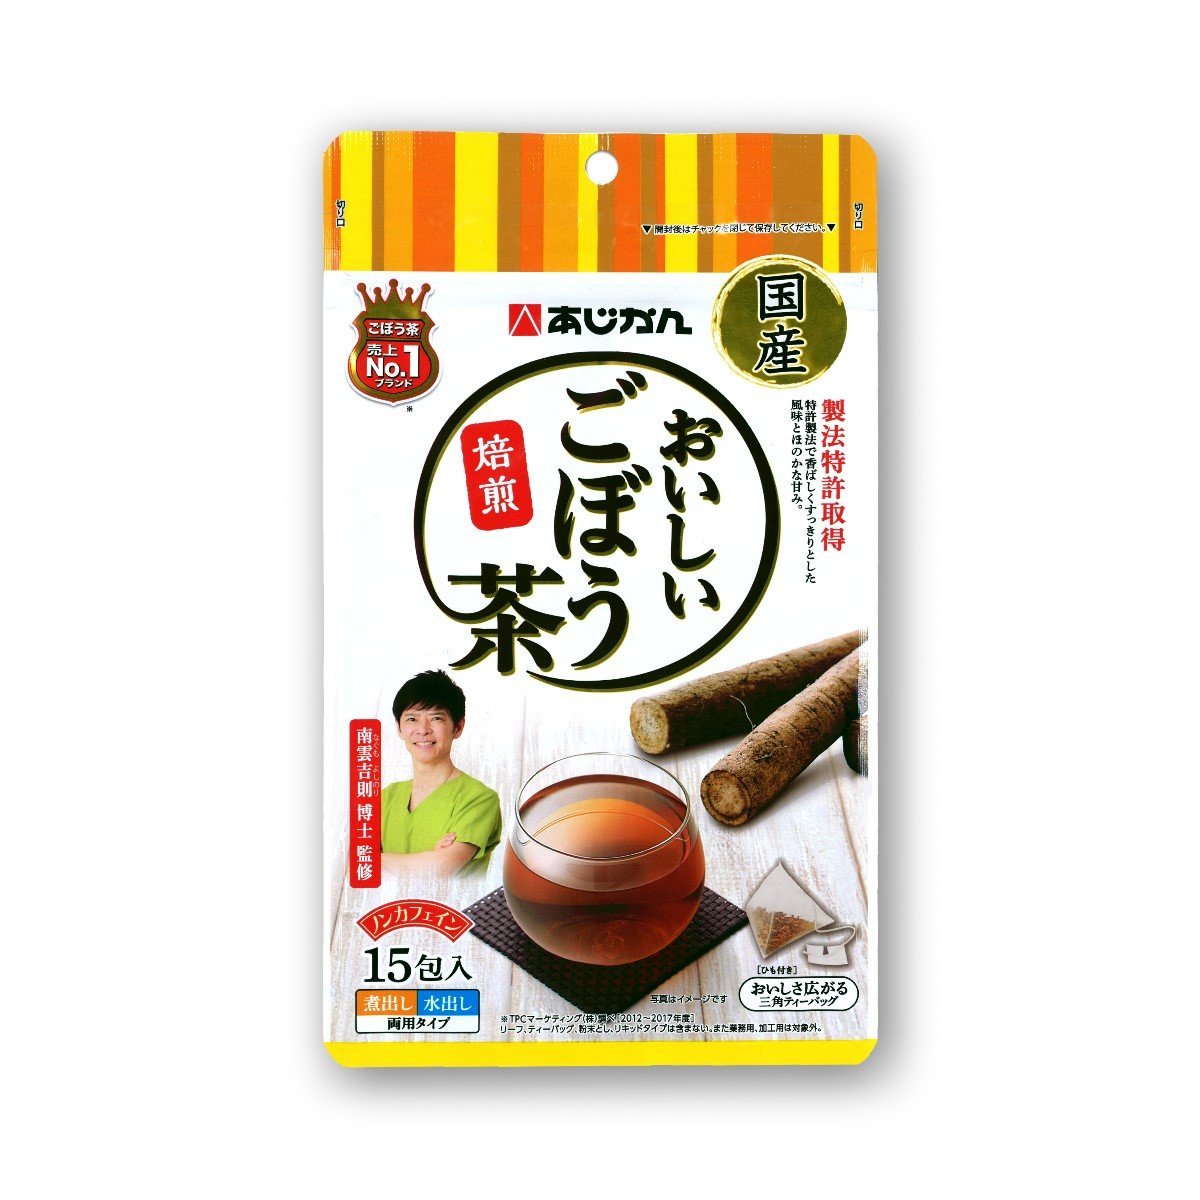 Ajikan Ahjikan 日本牛蒡茶 Hktvmall 香港最大網購平台